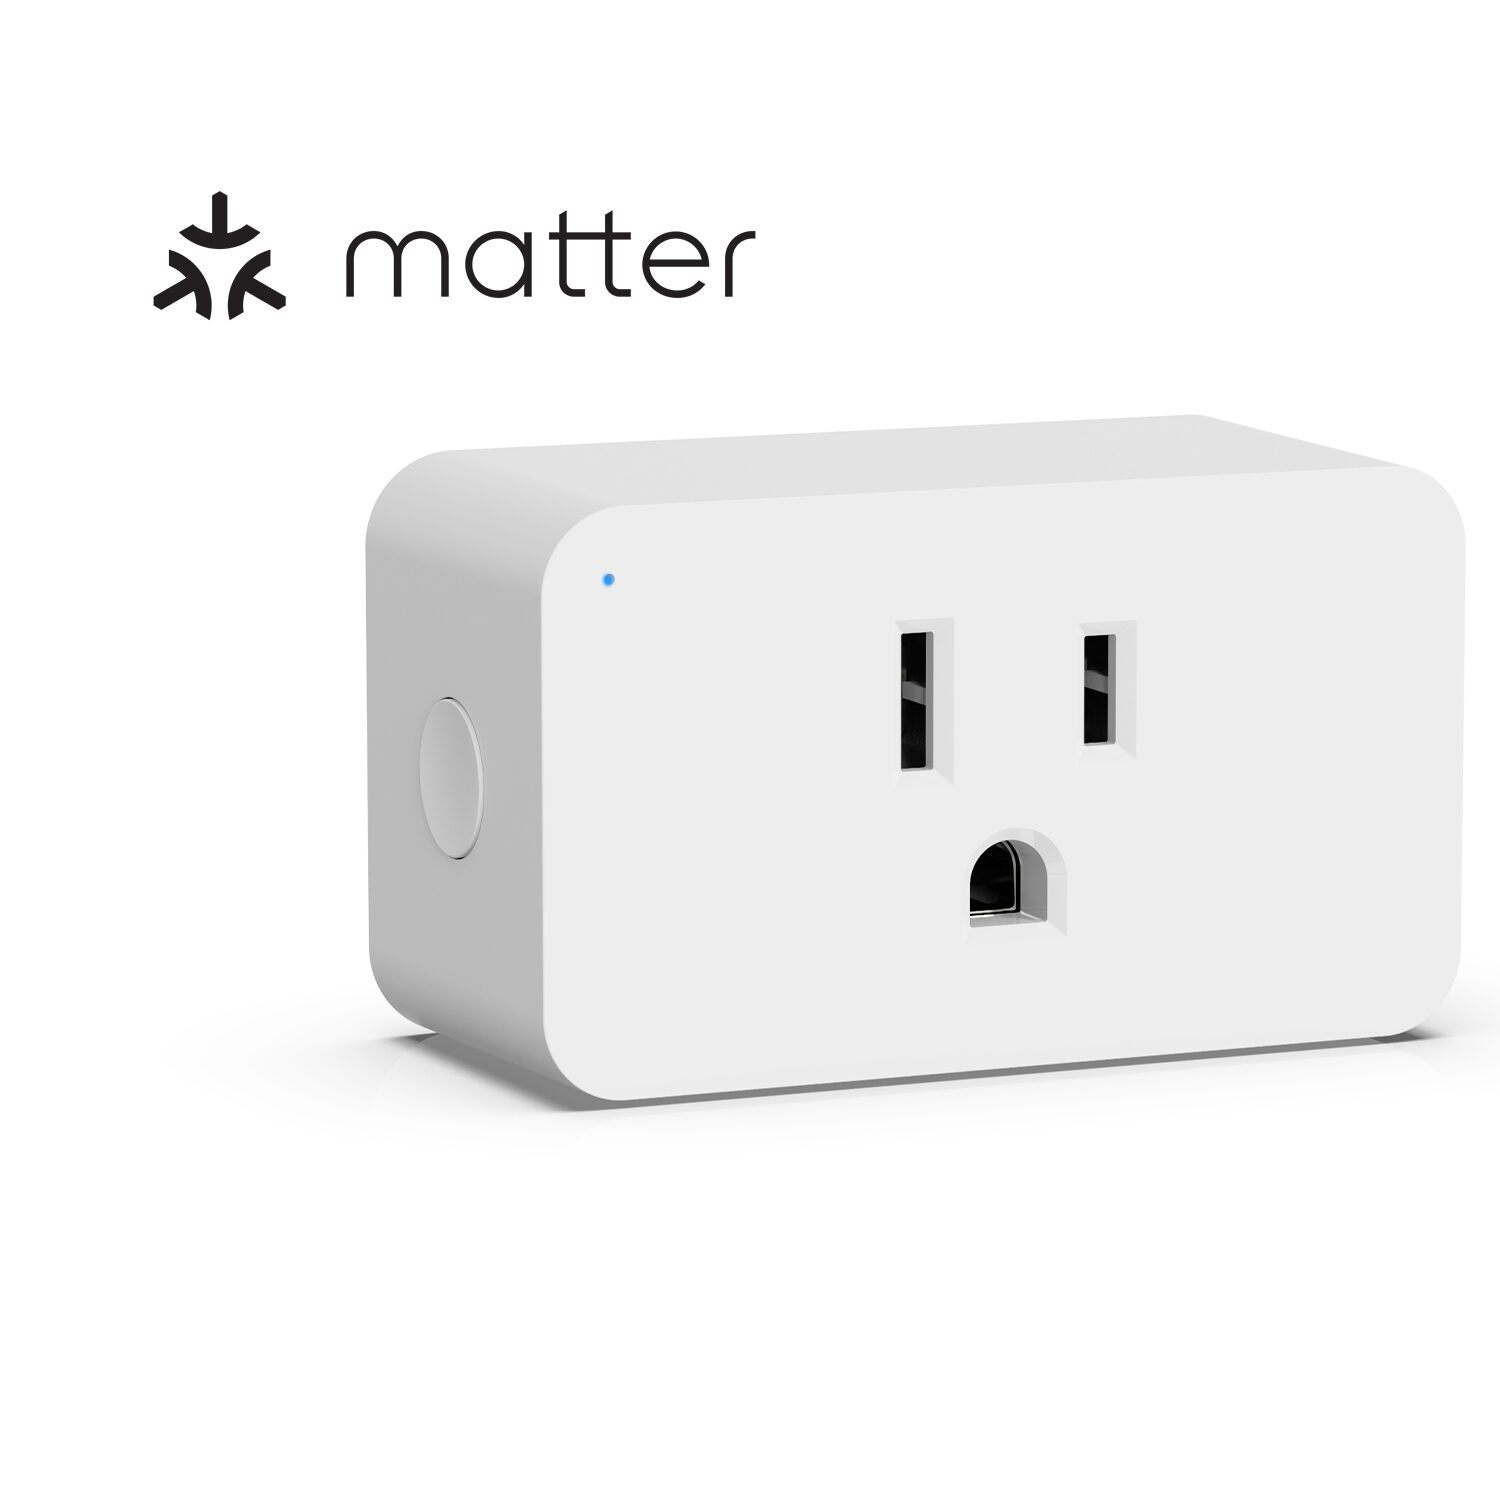 Matter Smart Outlets